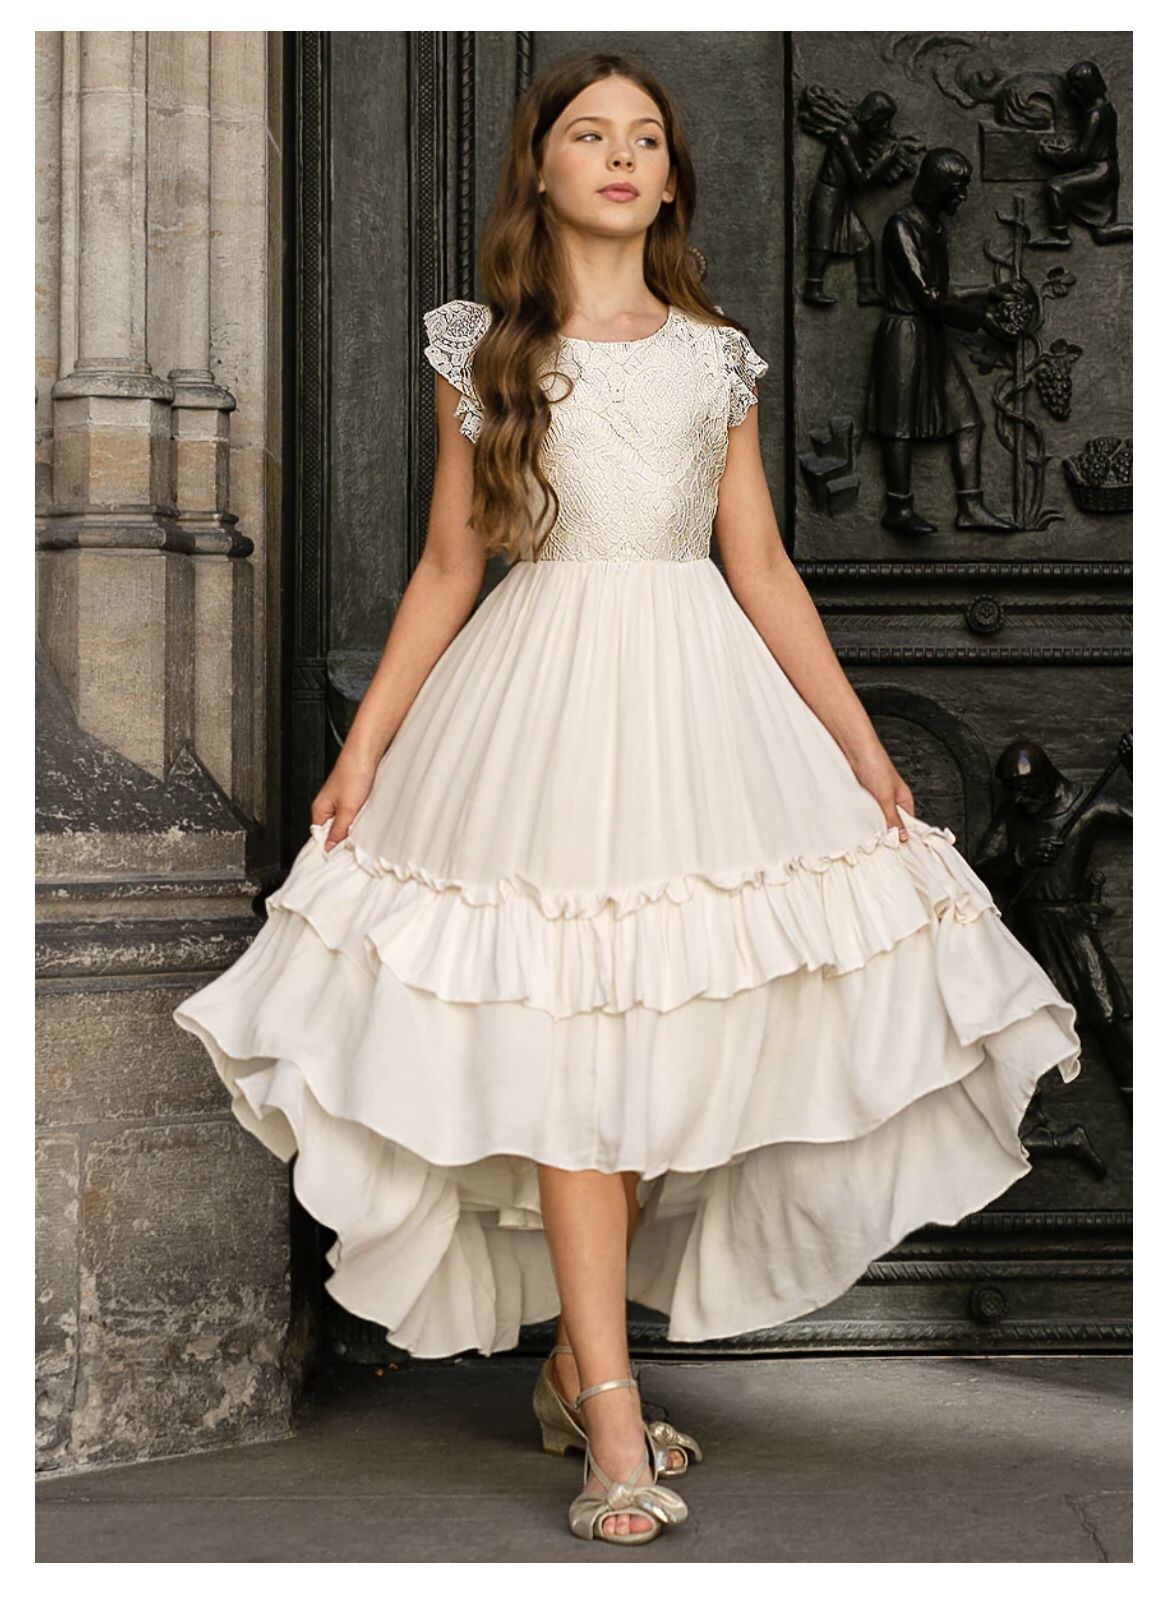 NWT Joyfolie Sz 7 Lacy Petticoat Dress in Cream